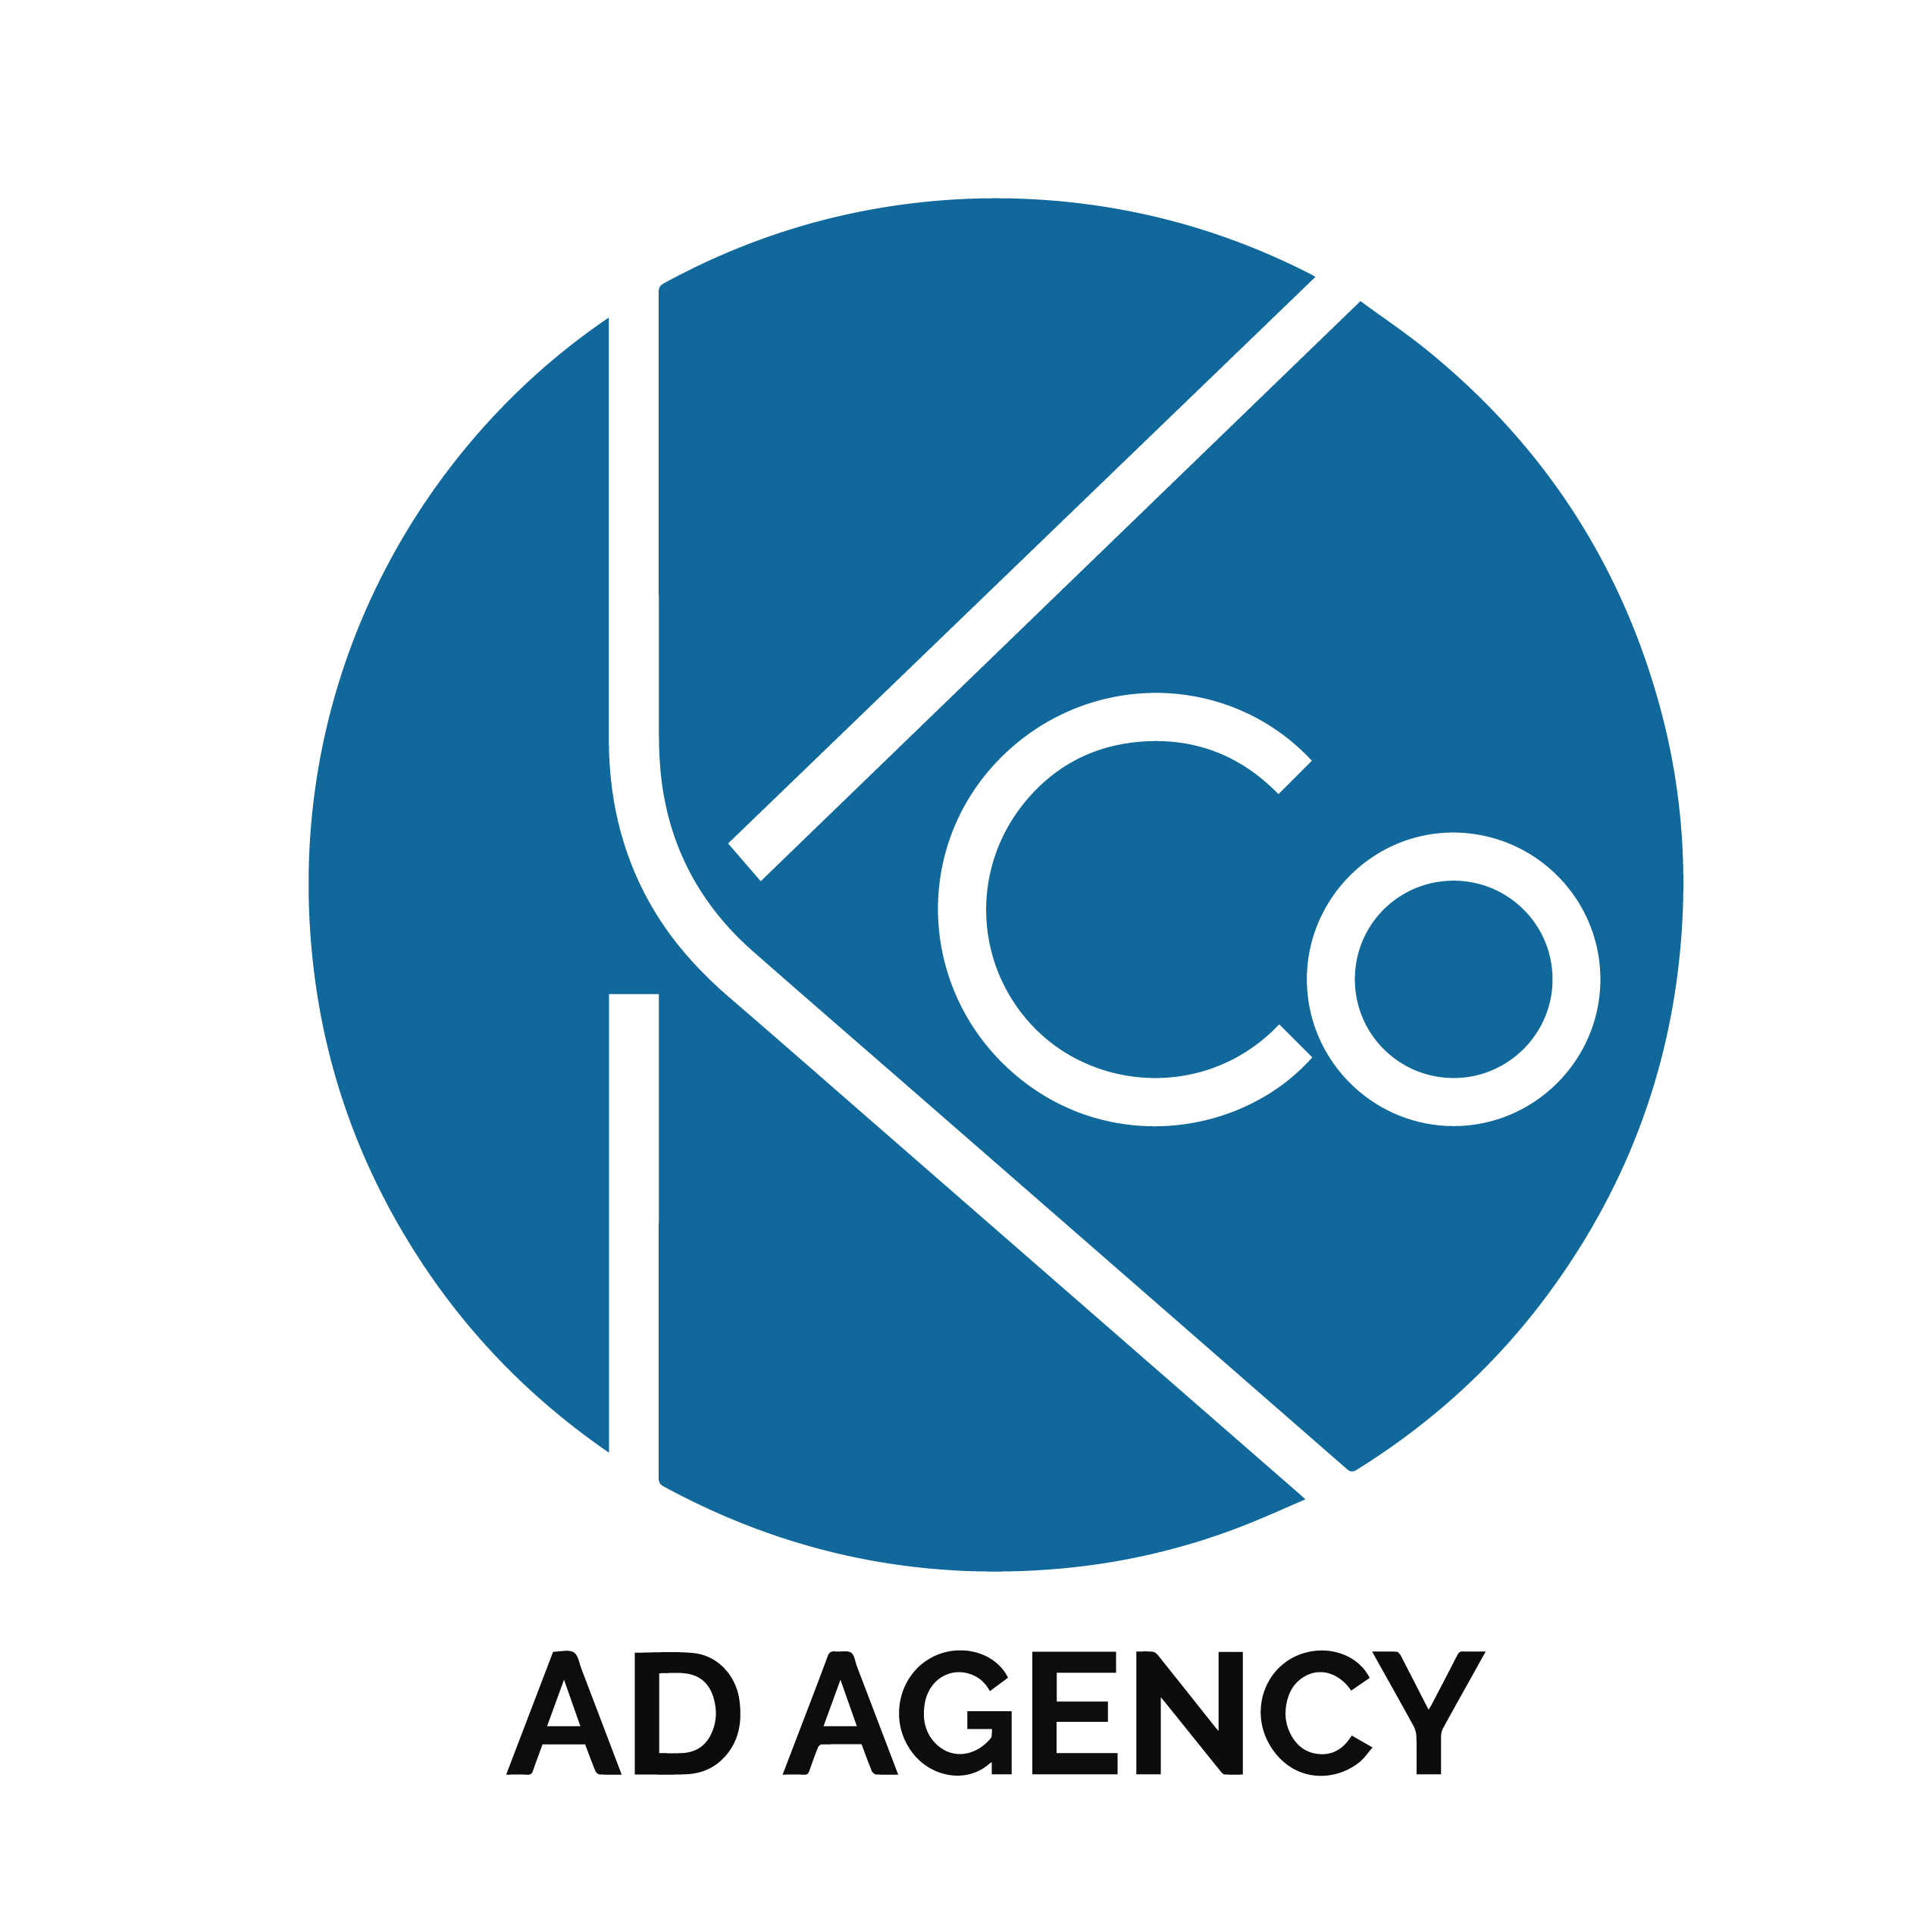 KCO Ad Agency logo.png